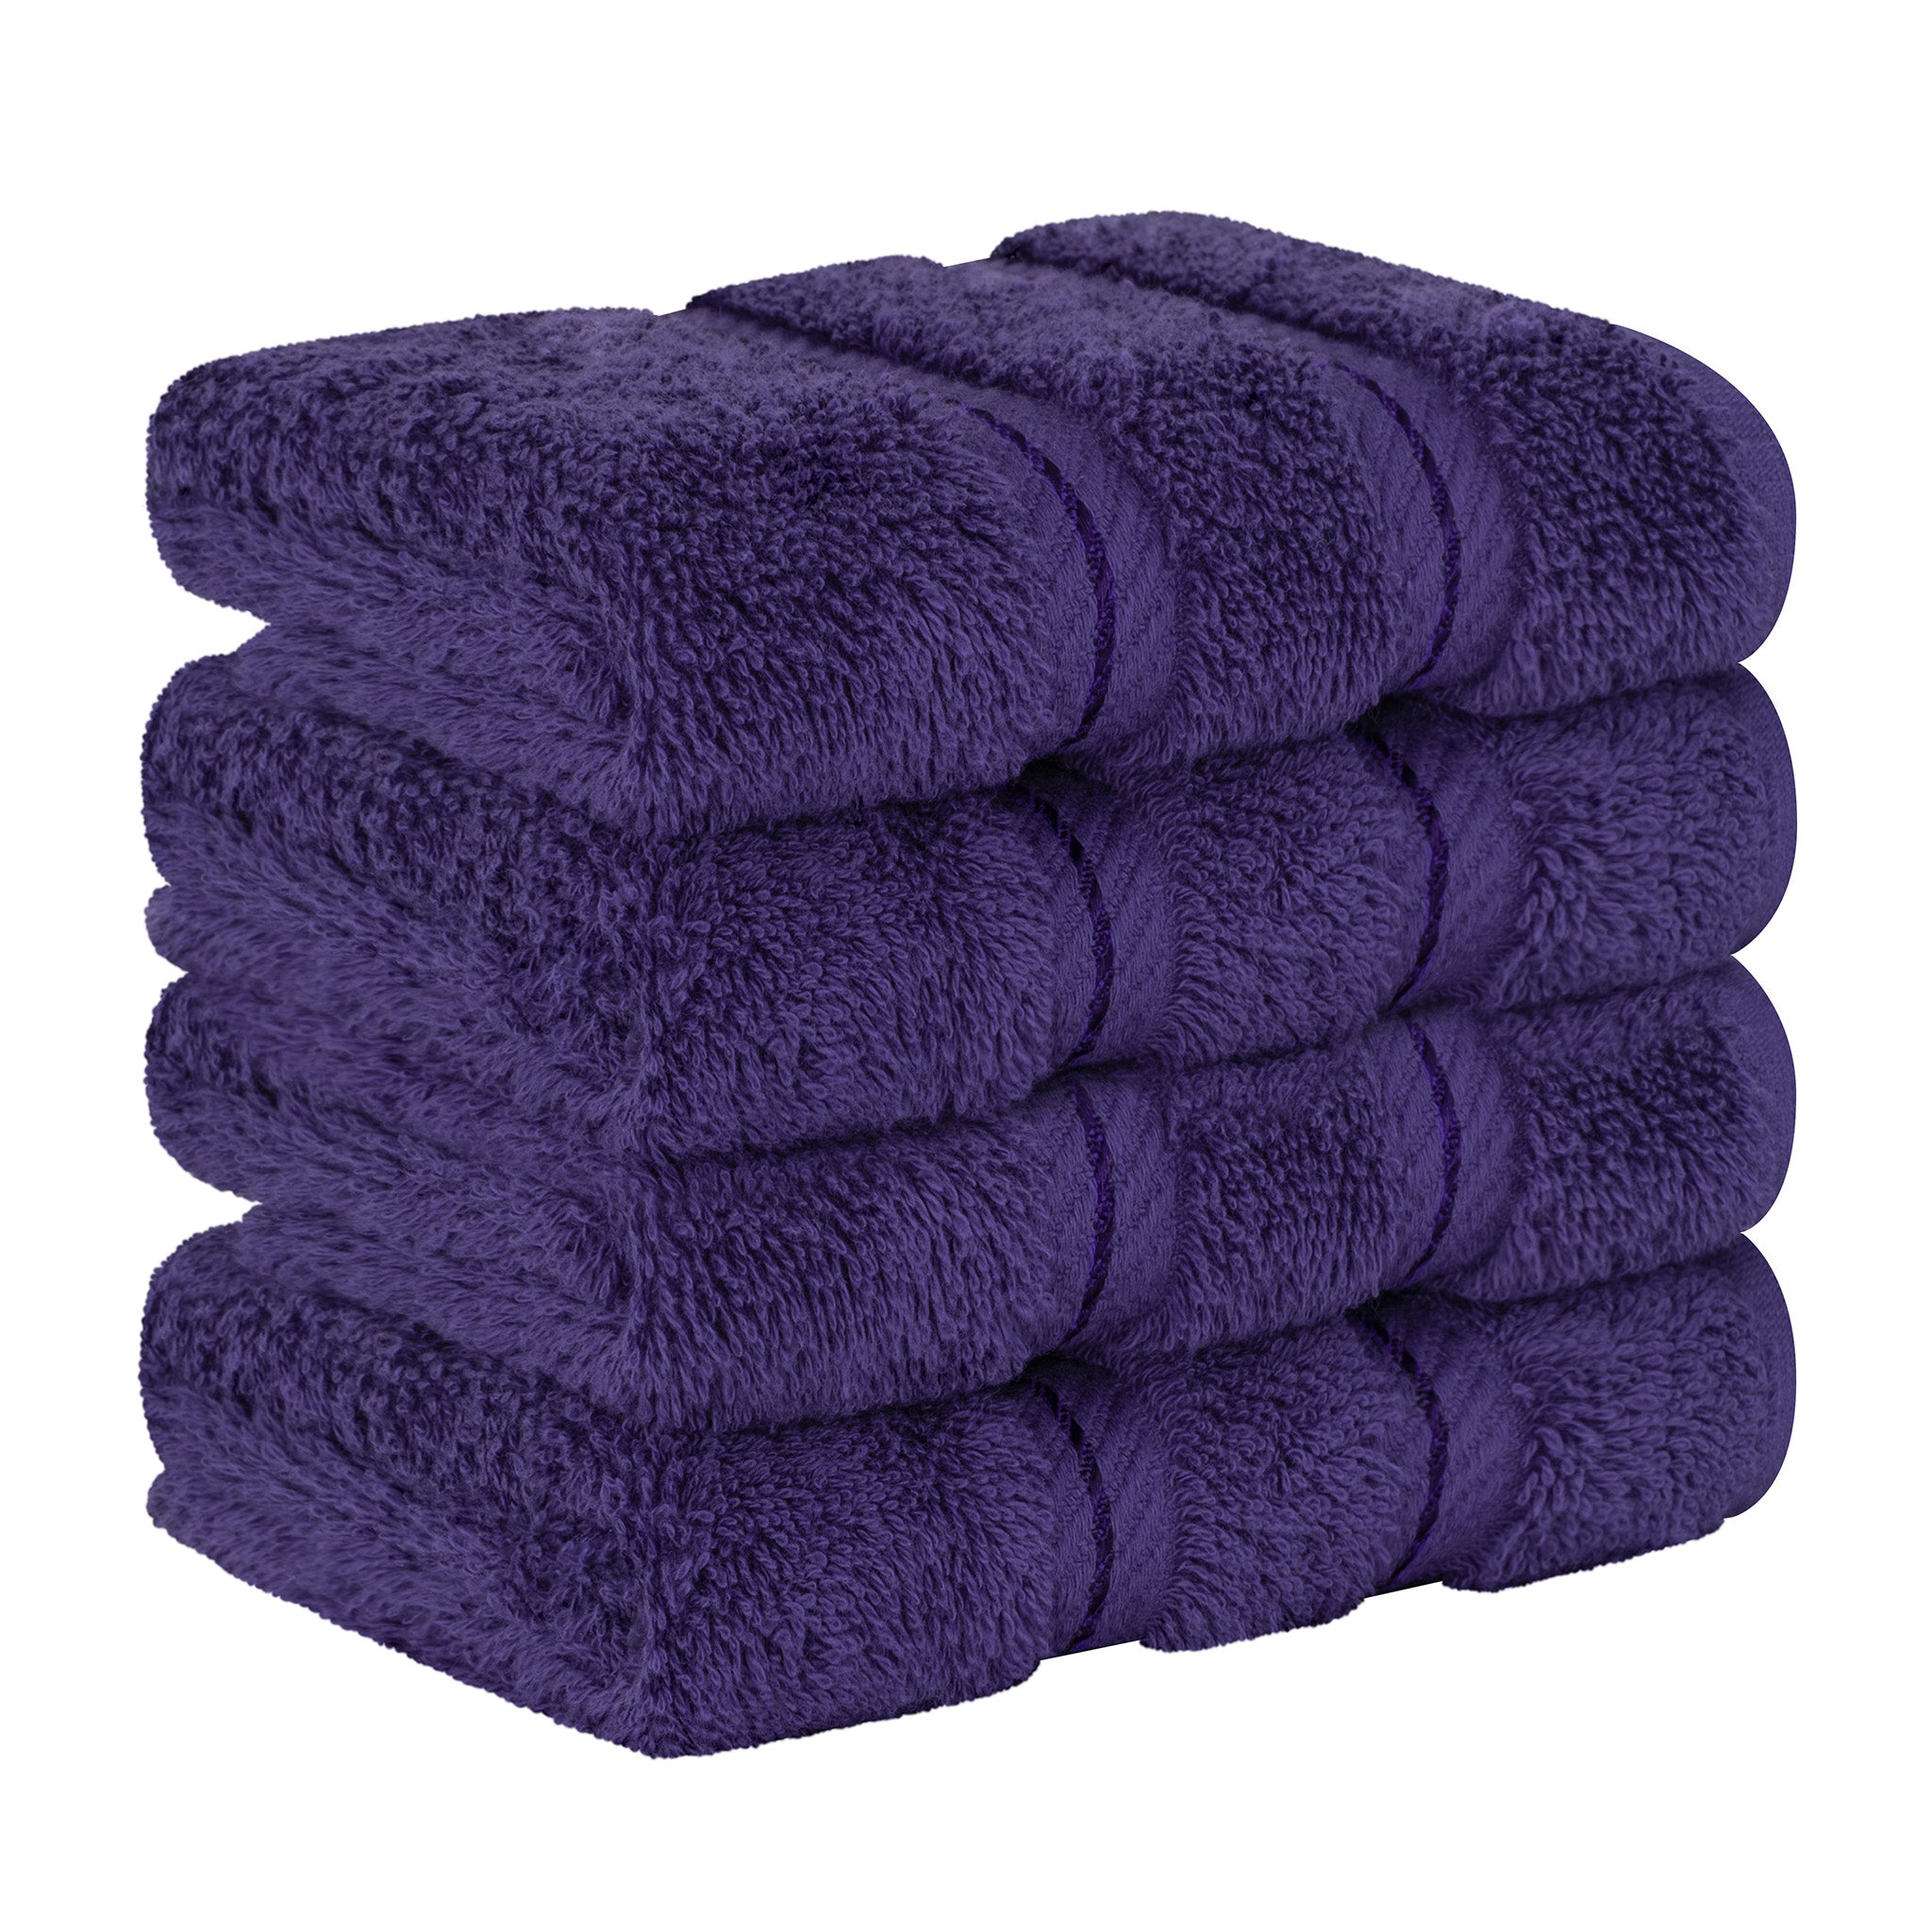  American Soft Linen 100% Turkish Cotton 4 Piece Washcloth Set - Wholesale - purple-6